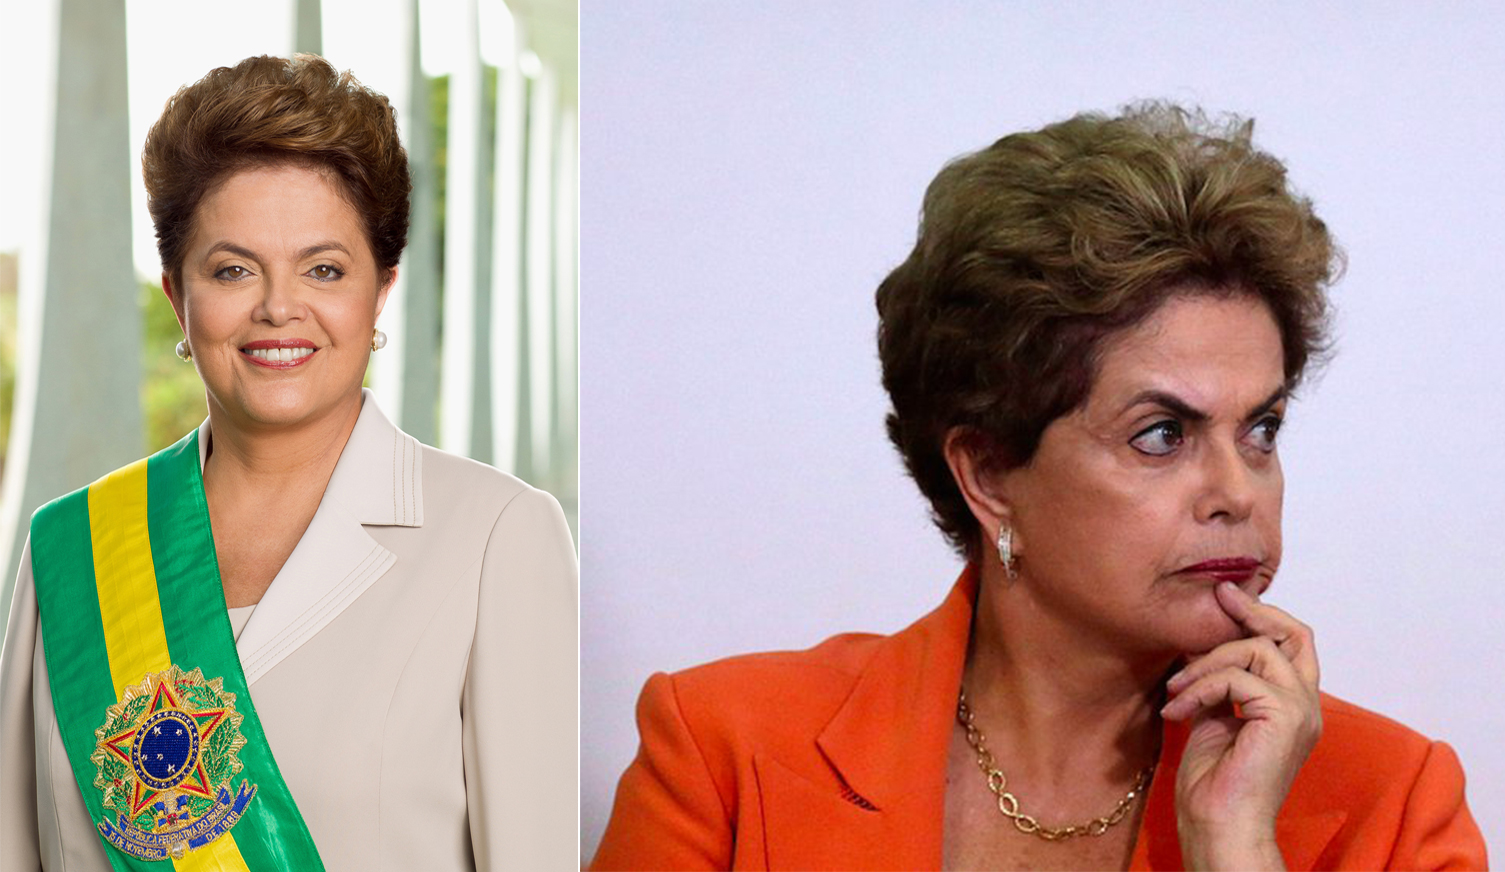 Impeachment of Dilma Rousseff: Brazil's President Dilma Rousseff is impeached and removed from office.